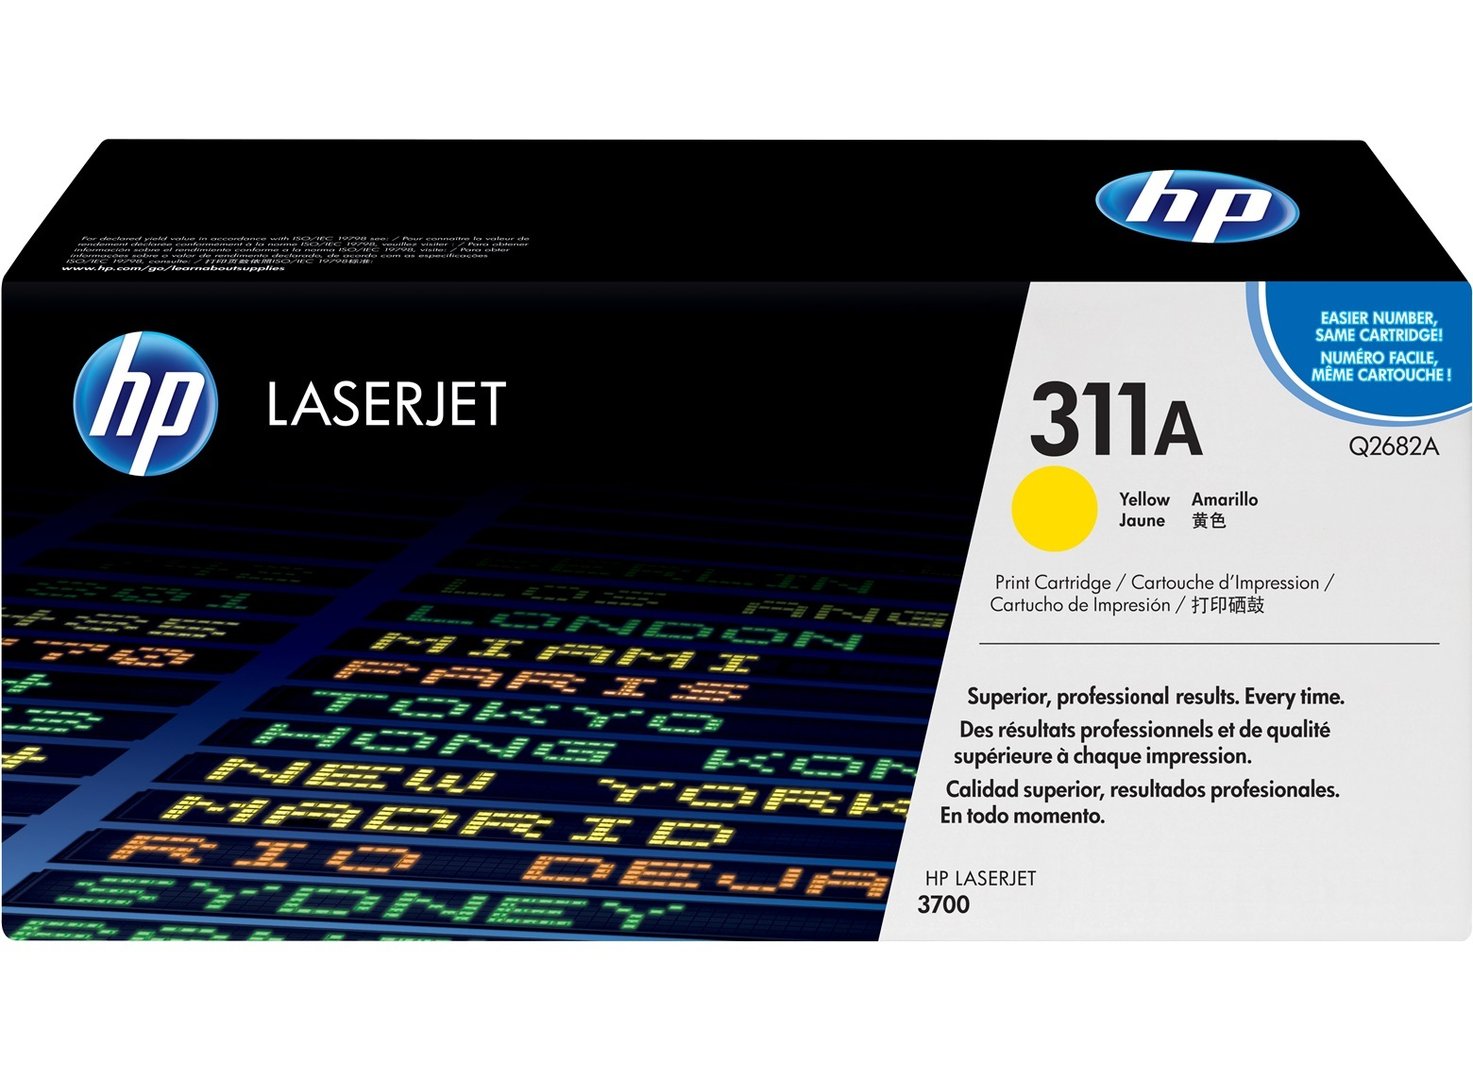 HP 311A Yellow Laser Toner Cartridge - Q2682A